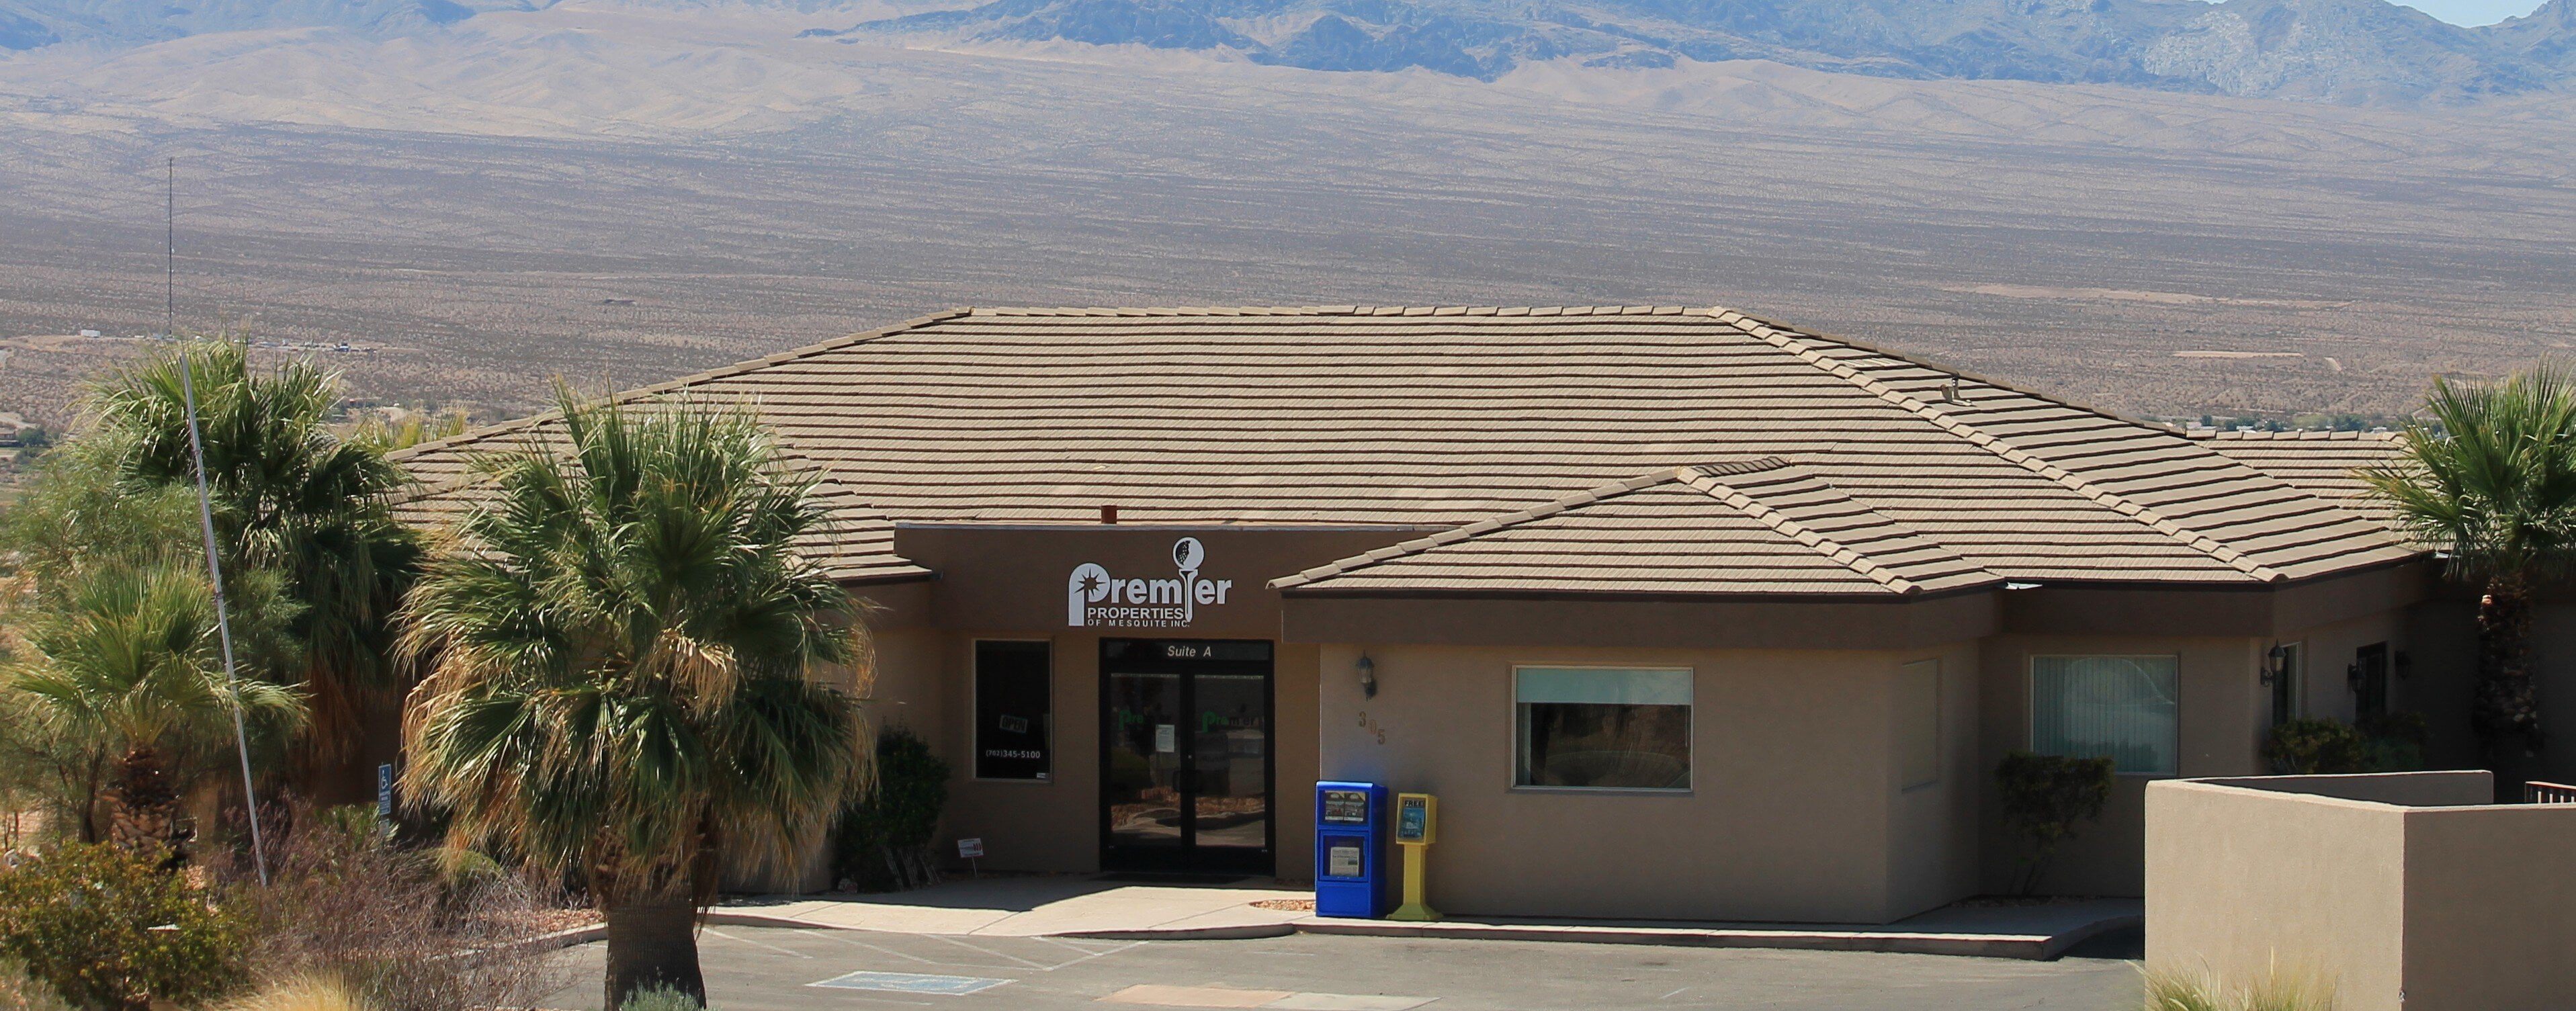 Premier Properties of Mesquite Nevada, LLC